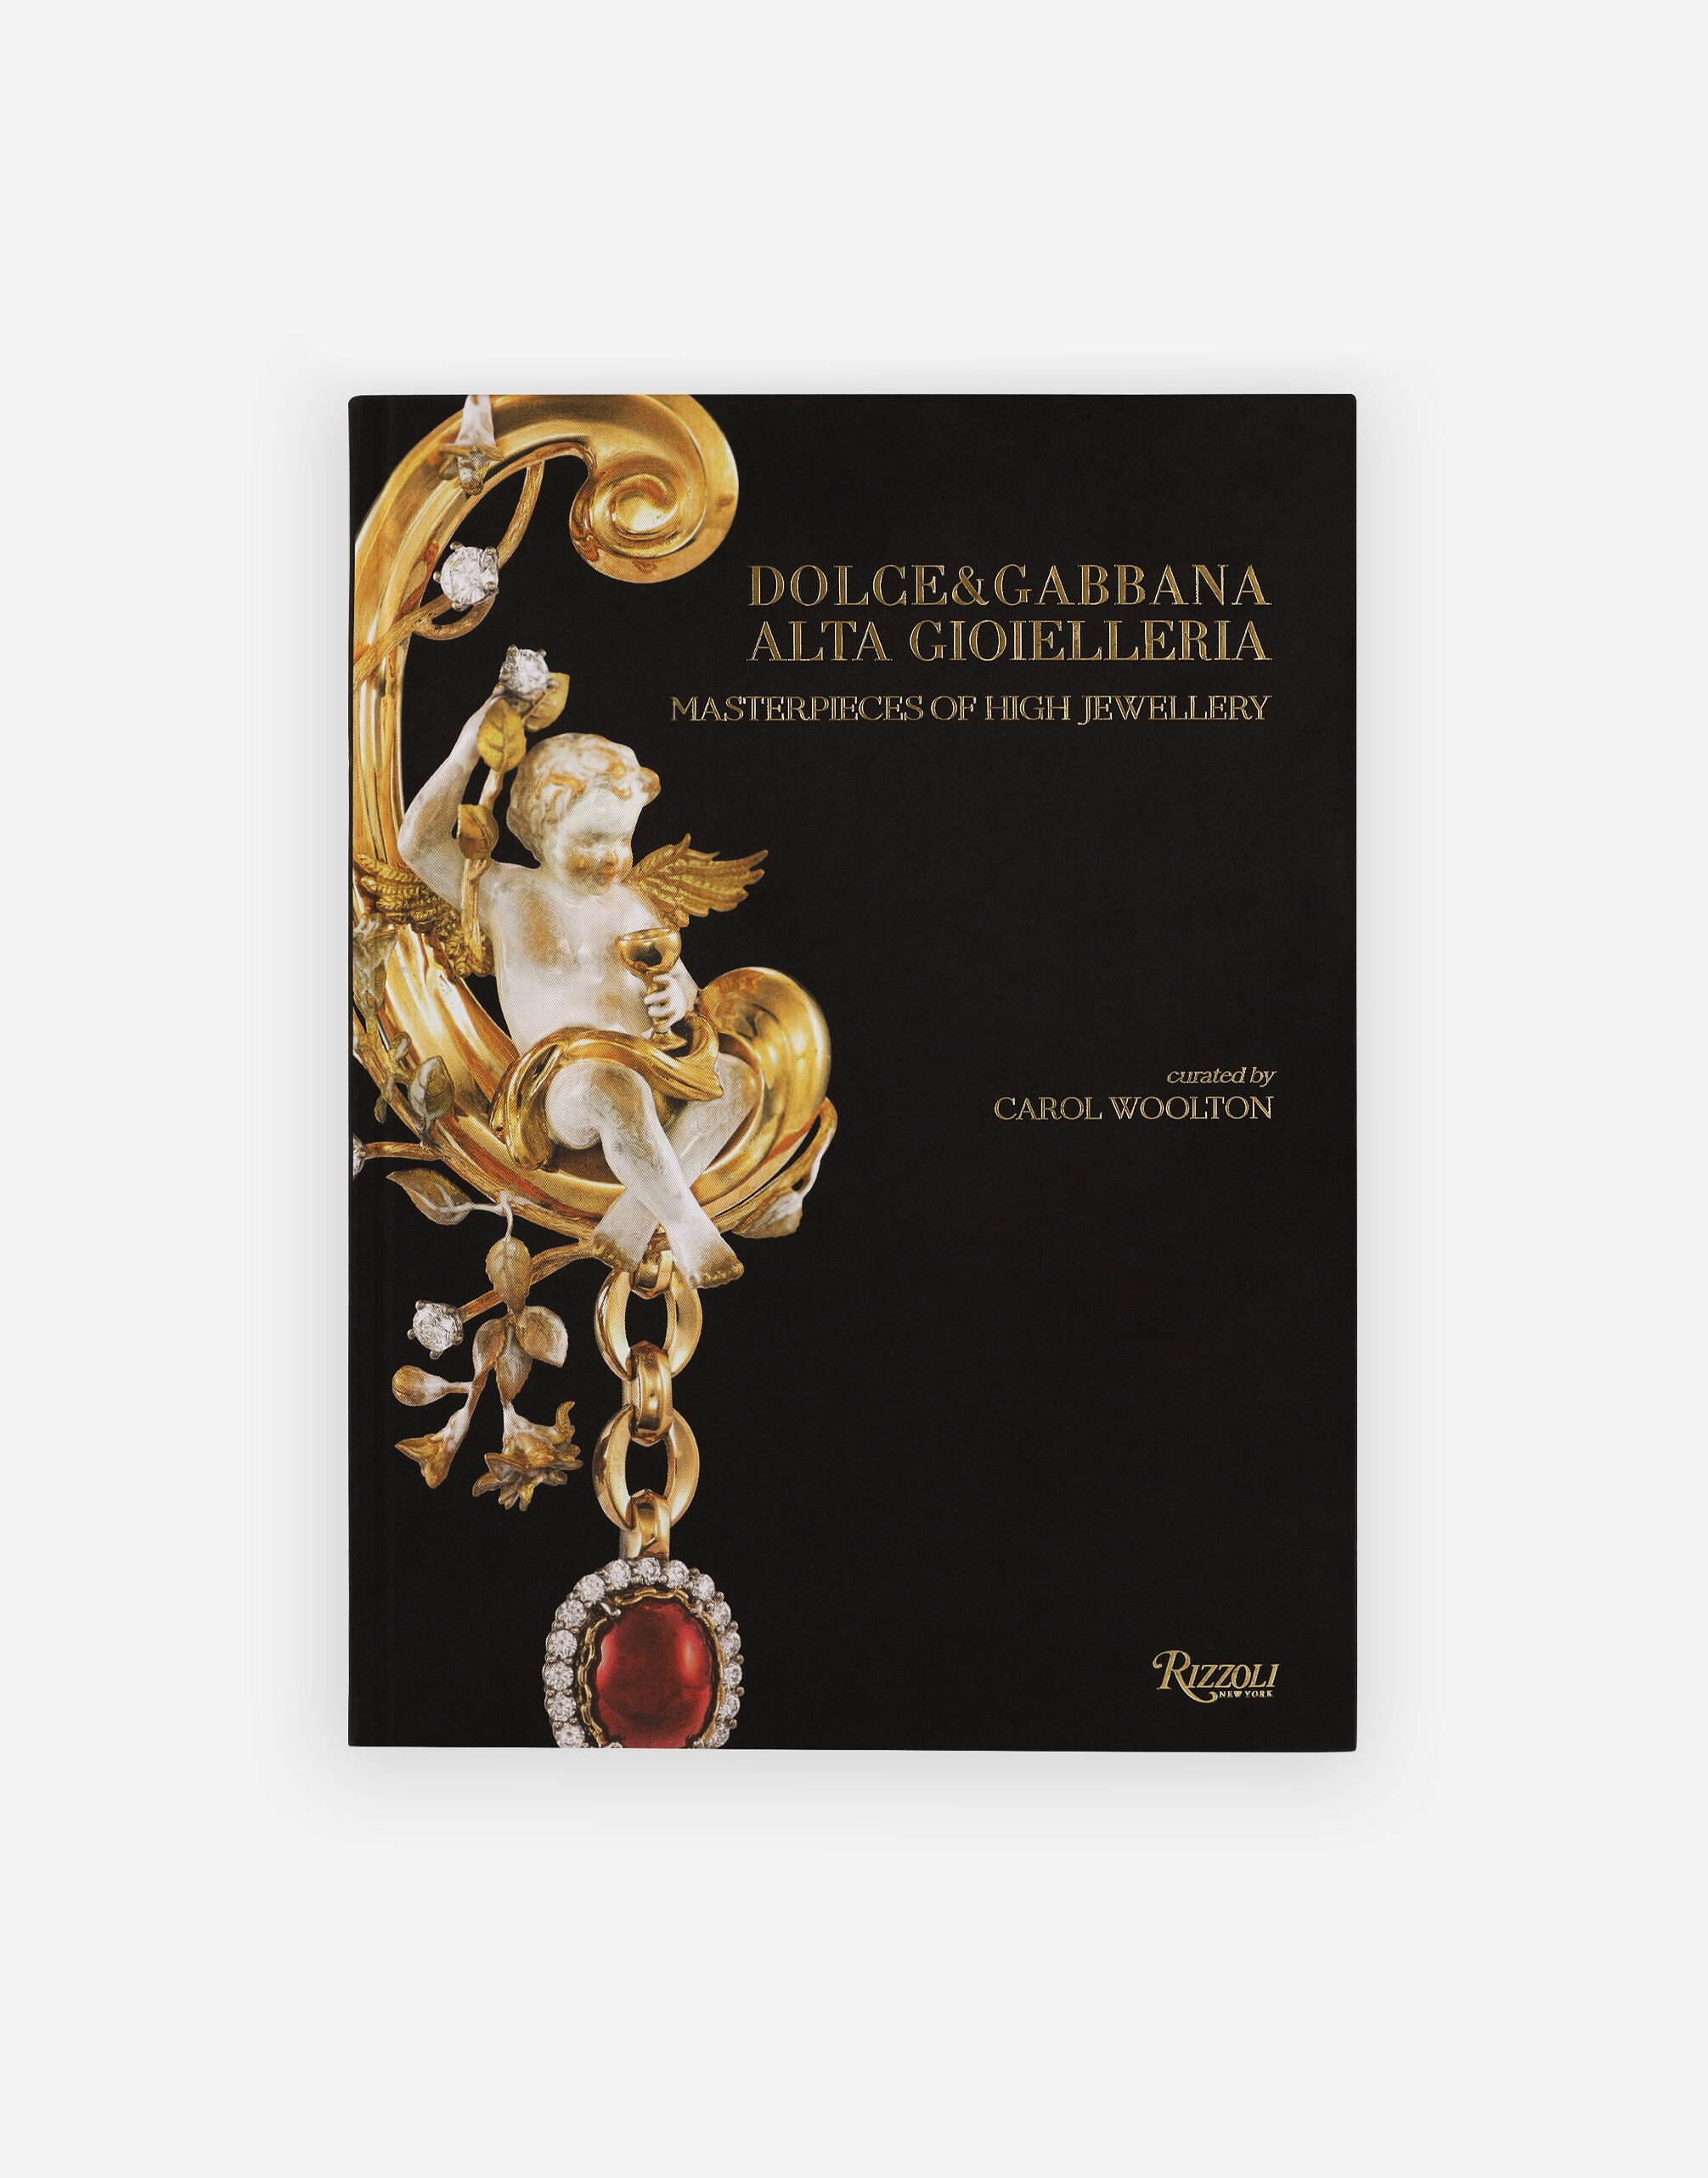 Dolce & Gabbana Dolce & Gabbana Alta Gioielleria: Masterpieces of High Jewellery 멀티 컬러 VL1132VLTW2